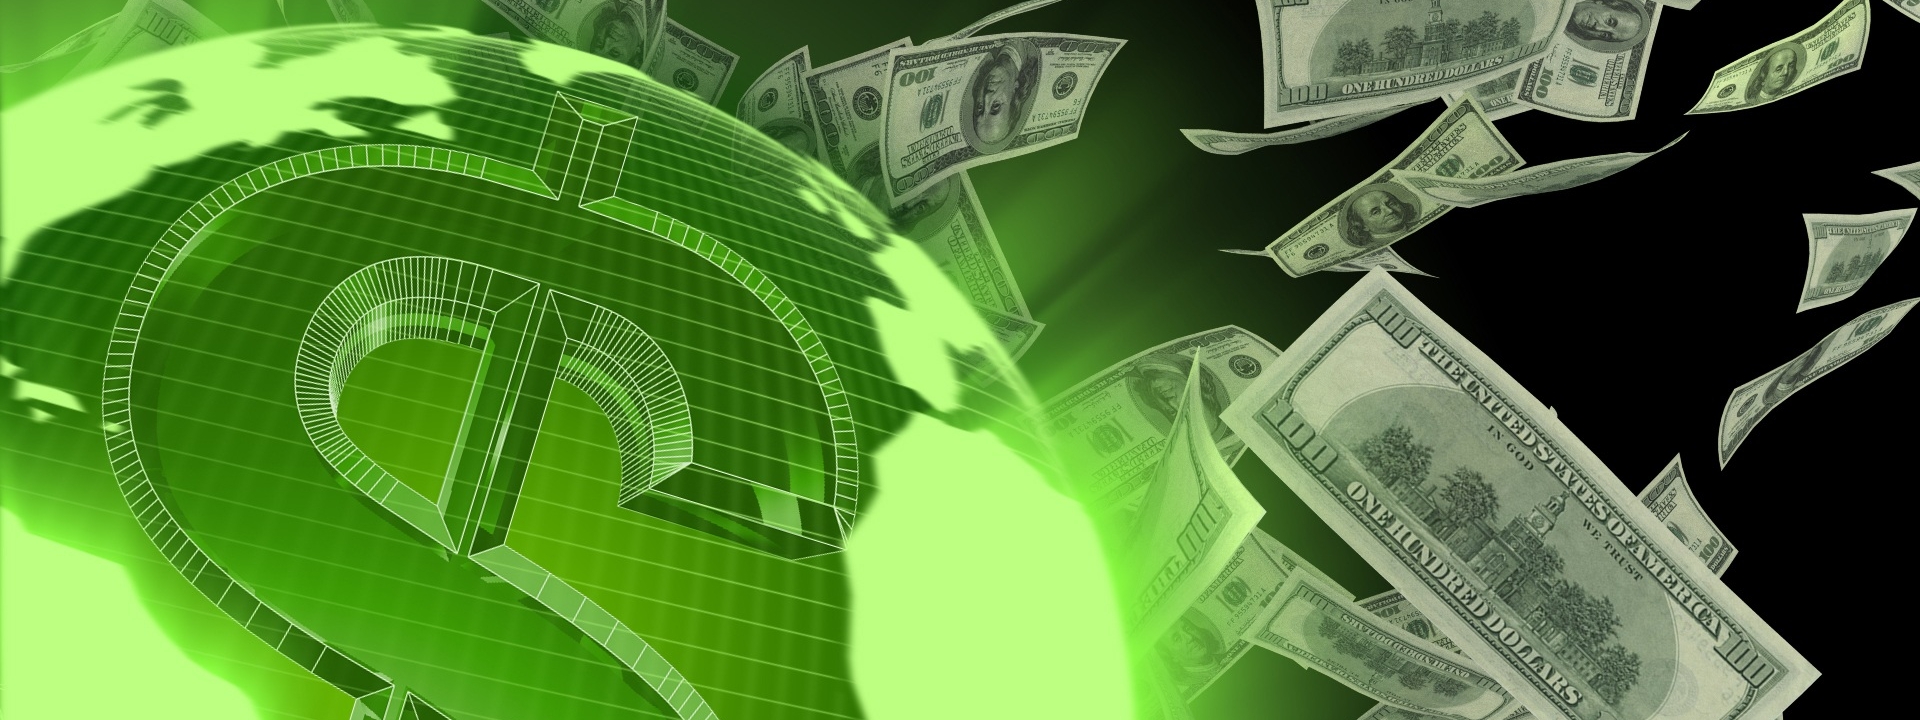 Dollar Bills in Green Color